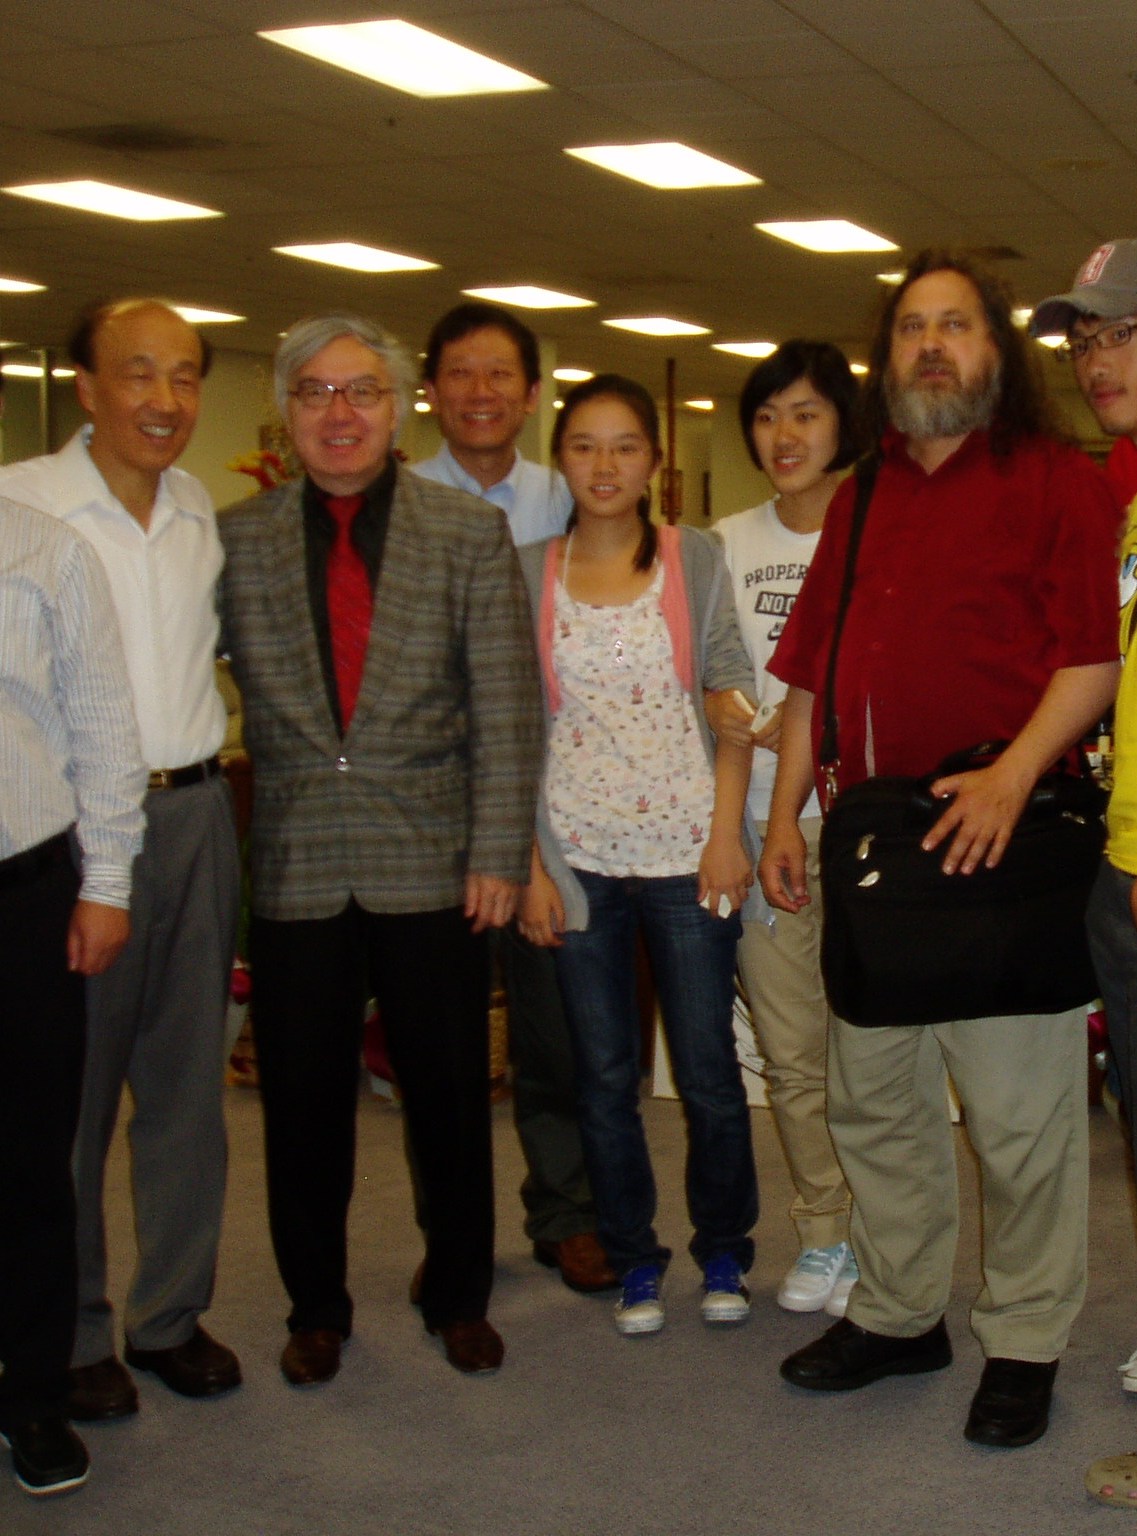 NPU picture of President of NPU, George Hsieh, Hugh Ching, Pochang Hsu, and Richard Stallman, 2010.